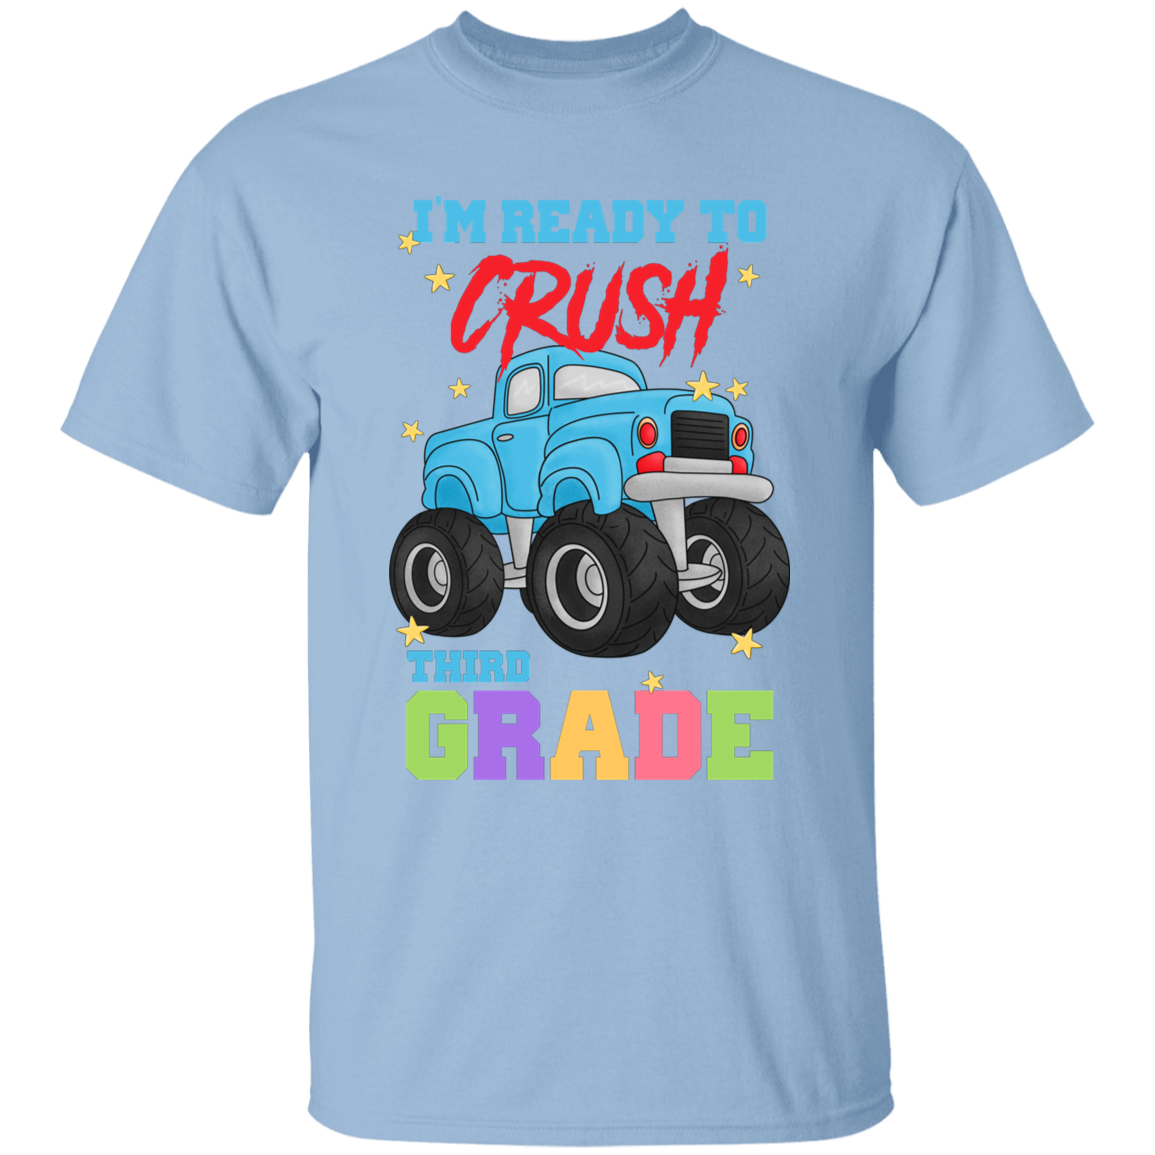 I'm Ready to Crush Third Grade Youth Cotton T-Shirt